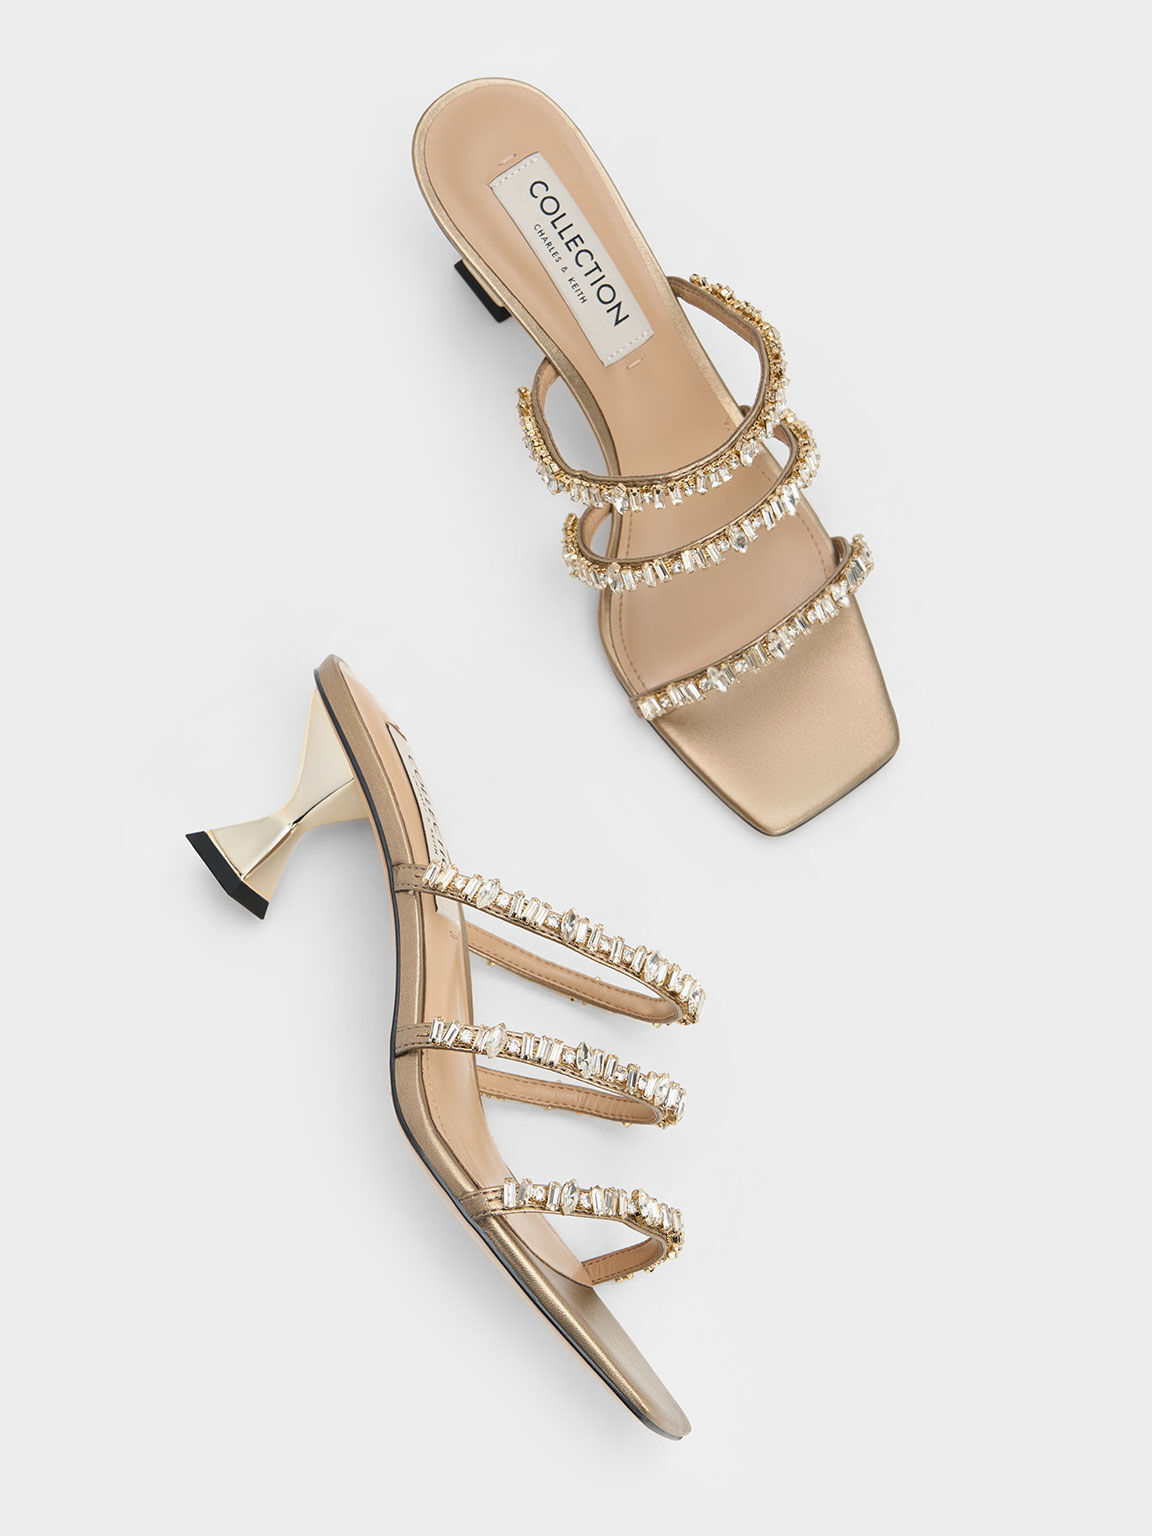 Wedding Collection: Gem-Encrusted Metallic Strappy Sandals, Gold, hi-res